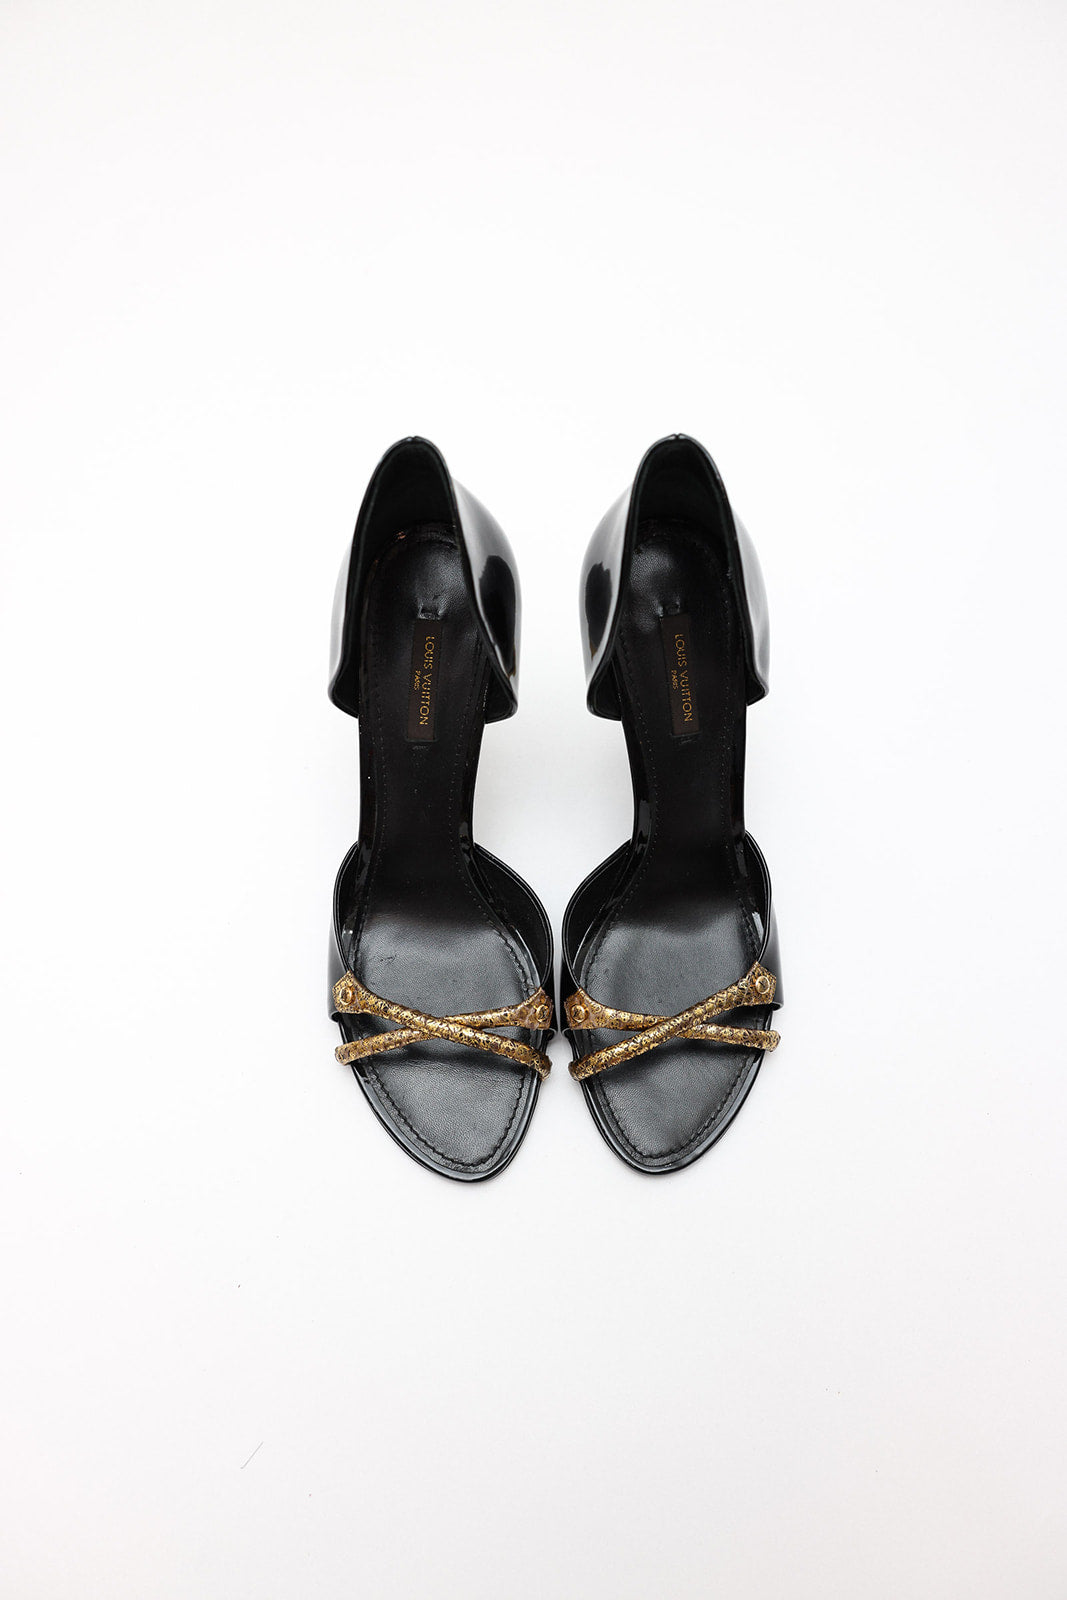 Louis Vuitton Black Patent Heels